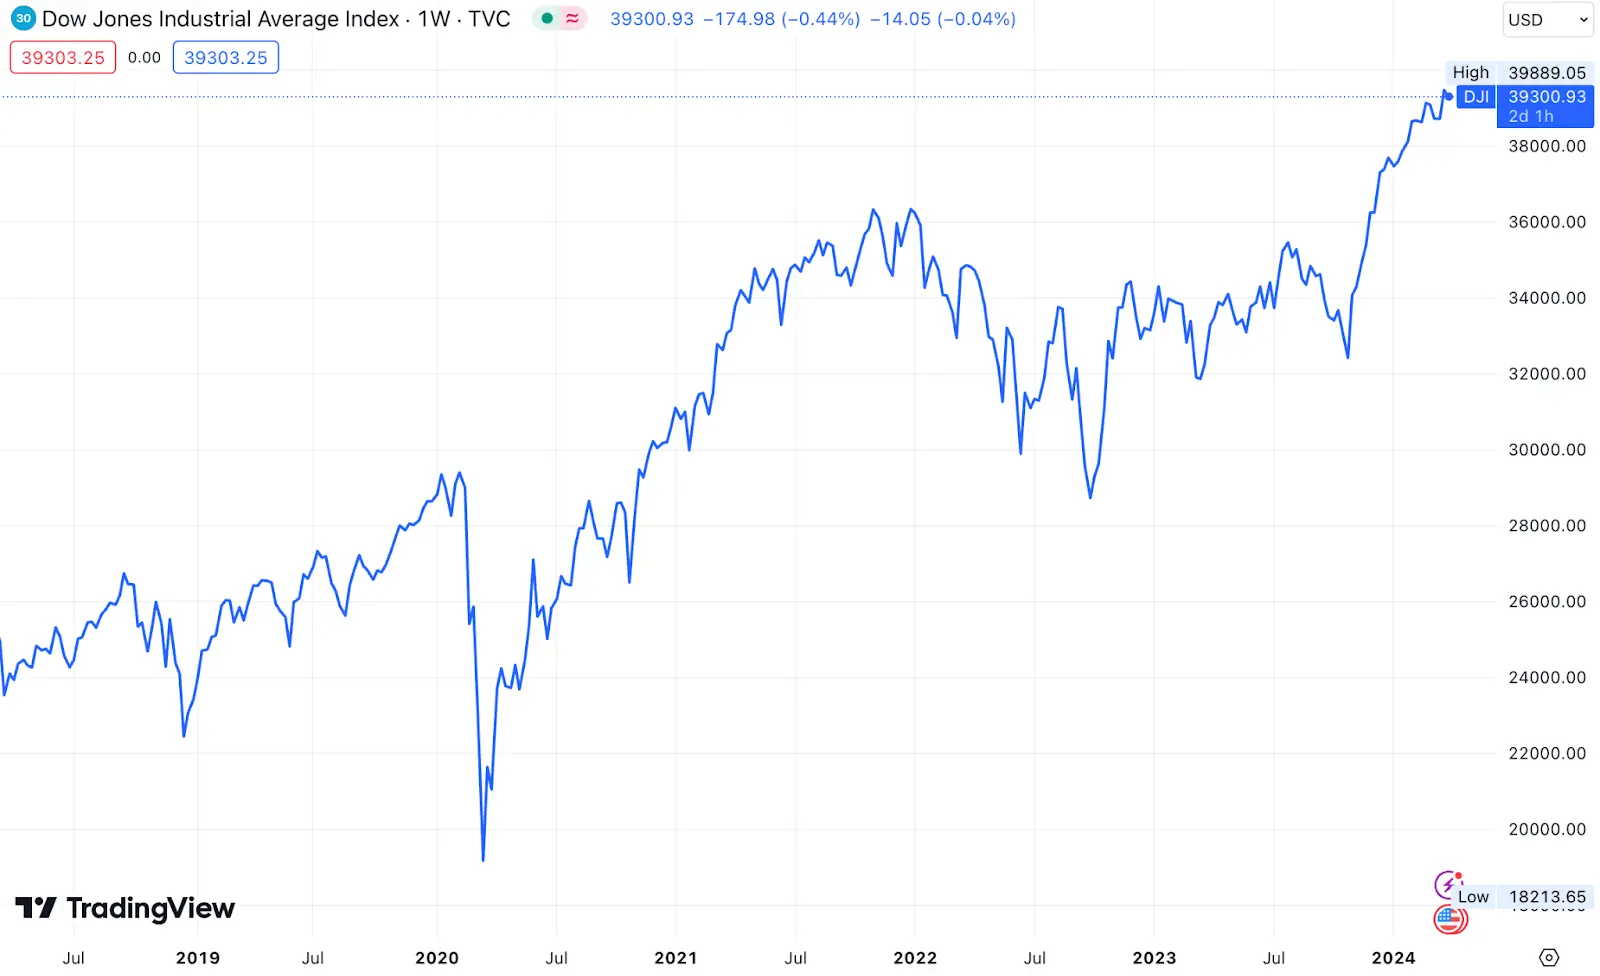 2020 Covid19 Stock Market Crash